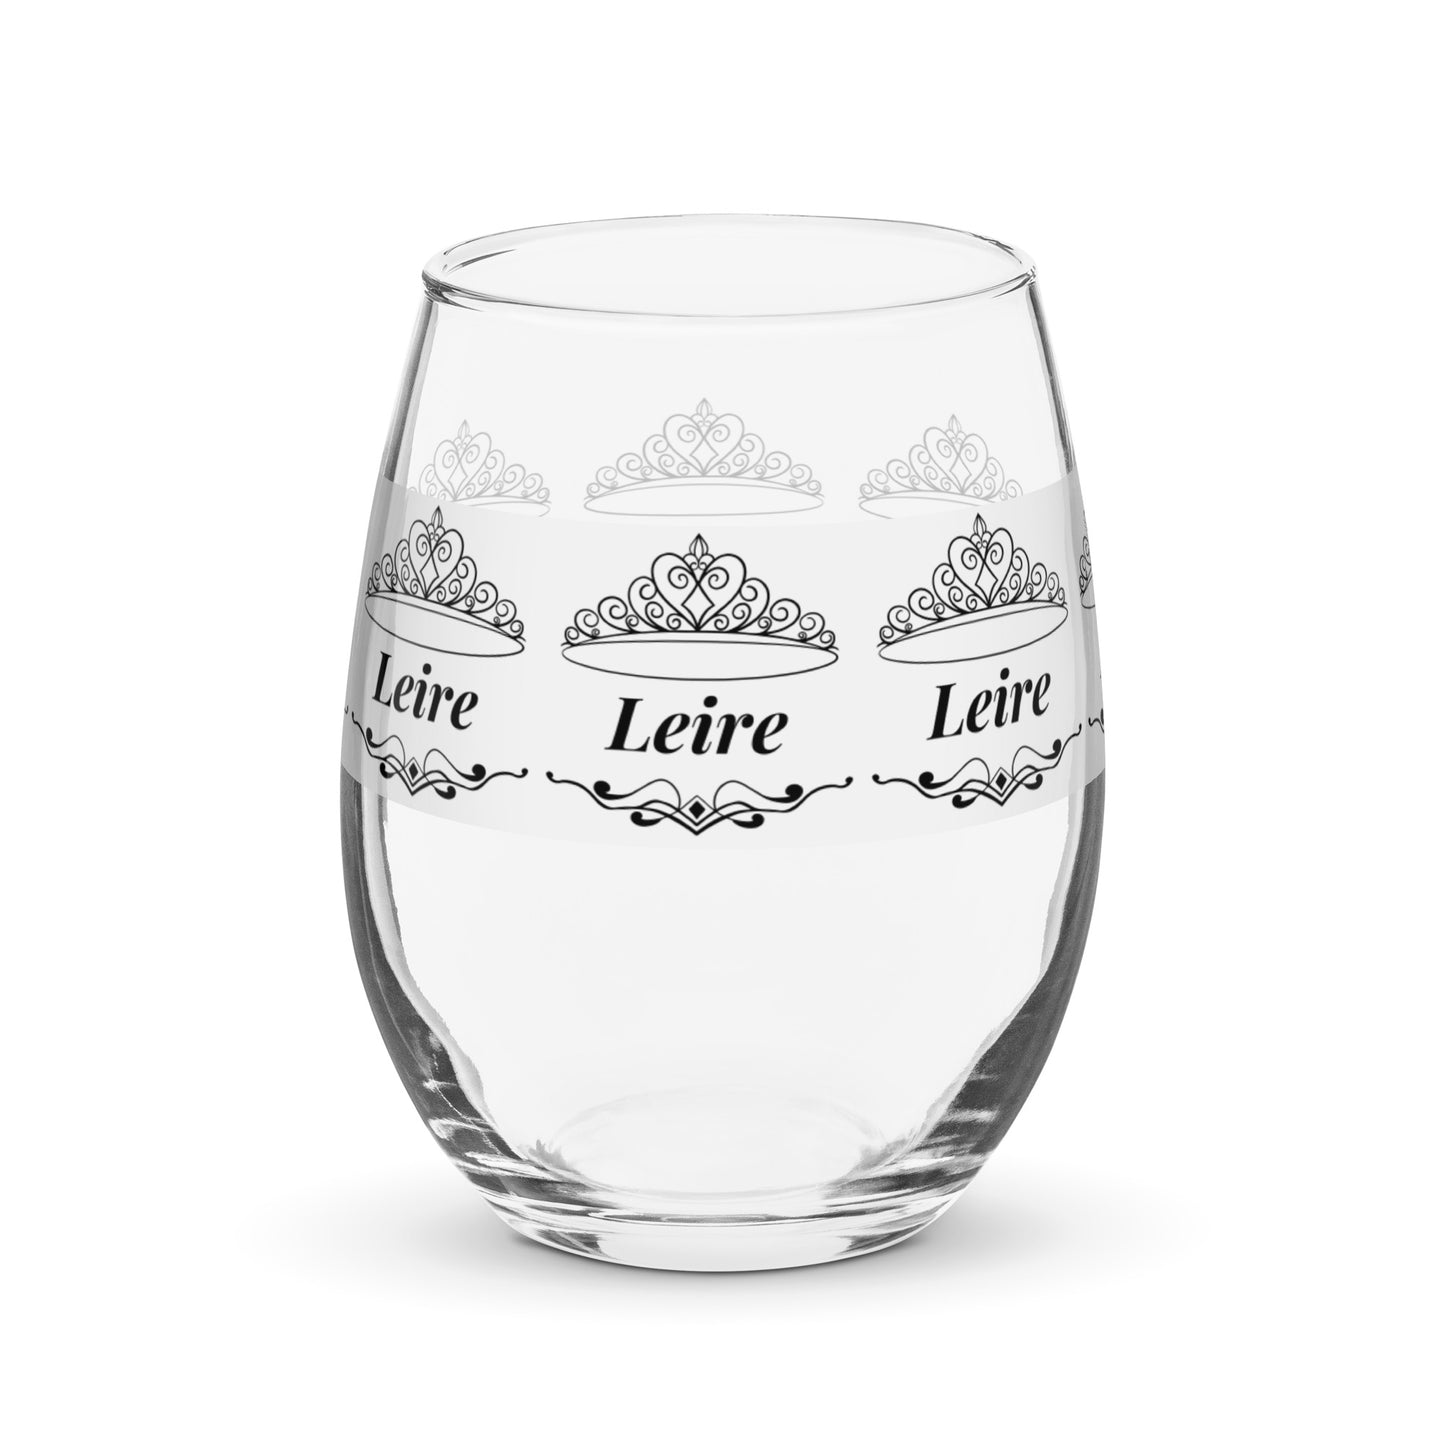 Leire name wine glass personalized wine glass wine glass